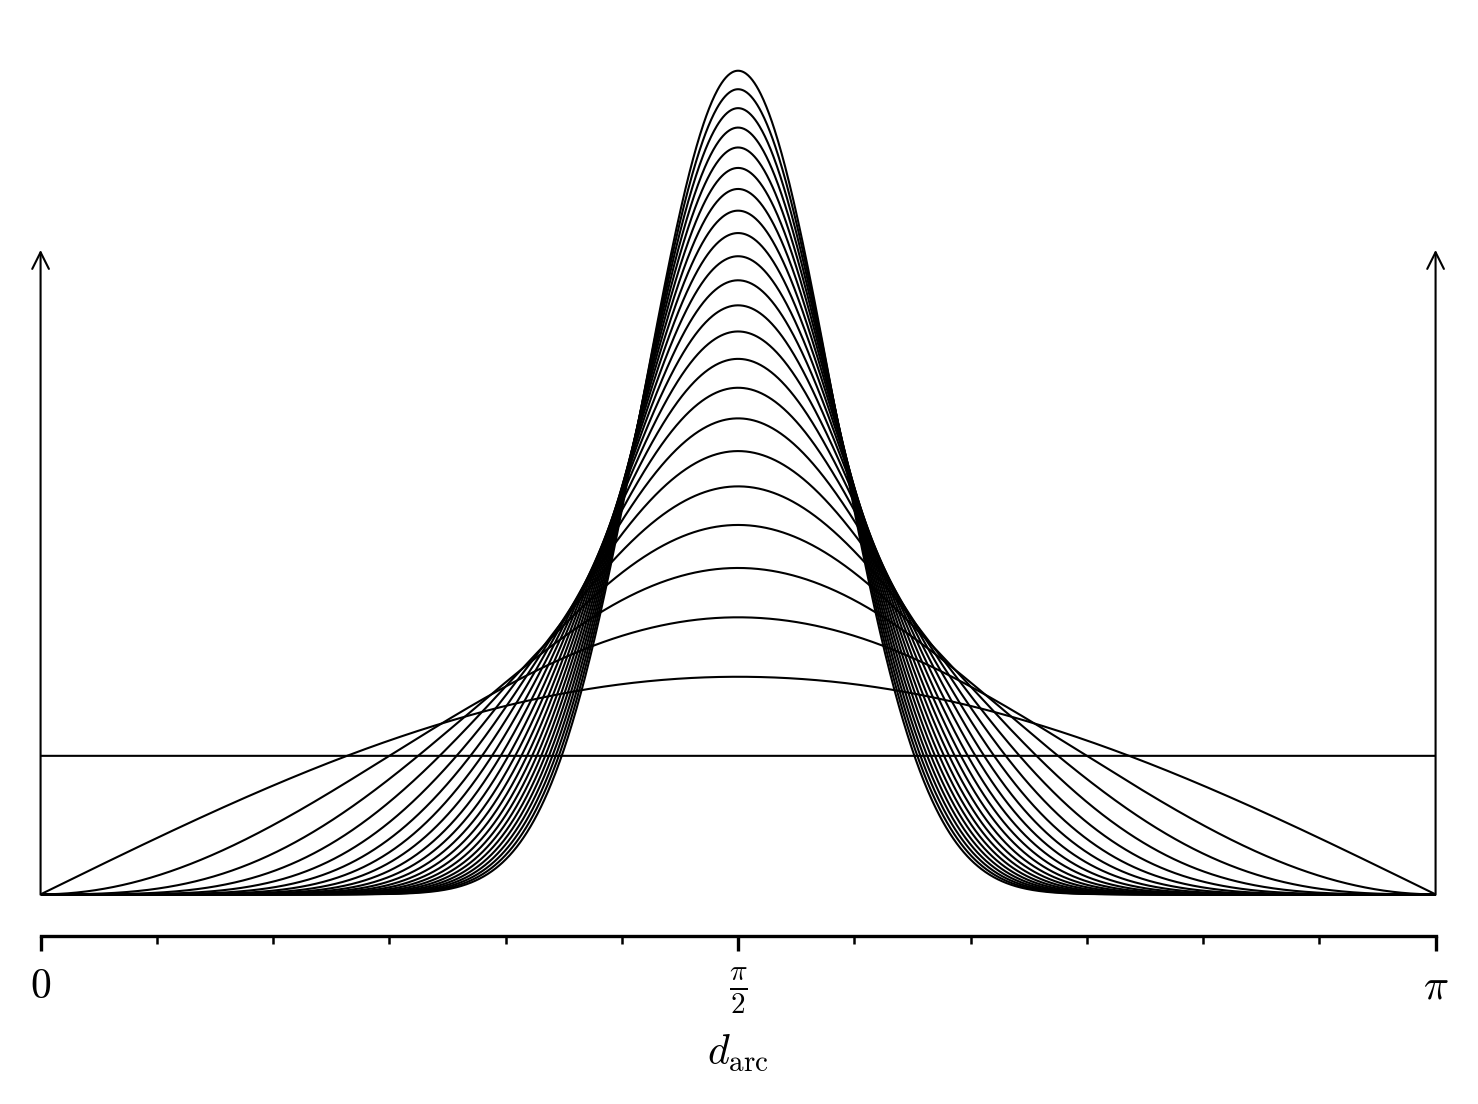 Arc length distribution